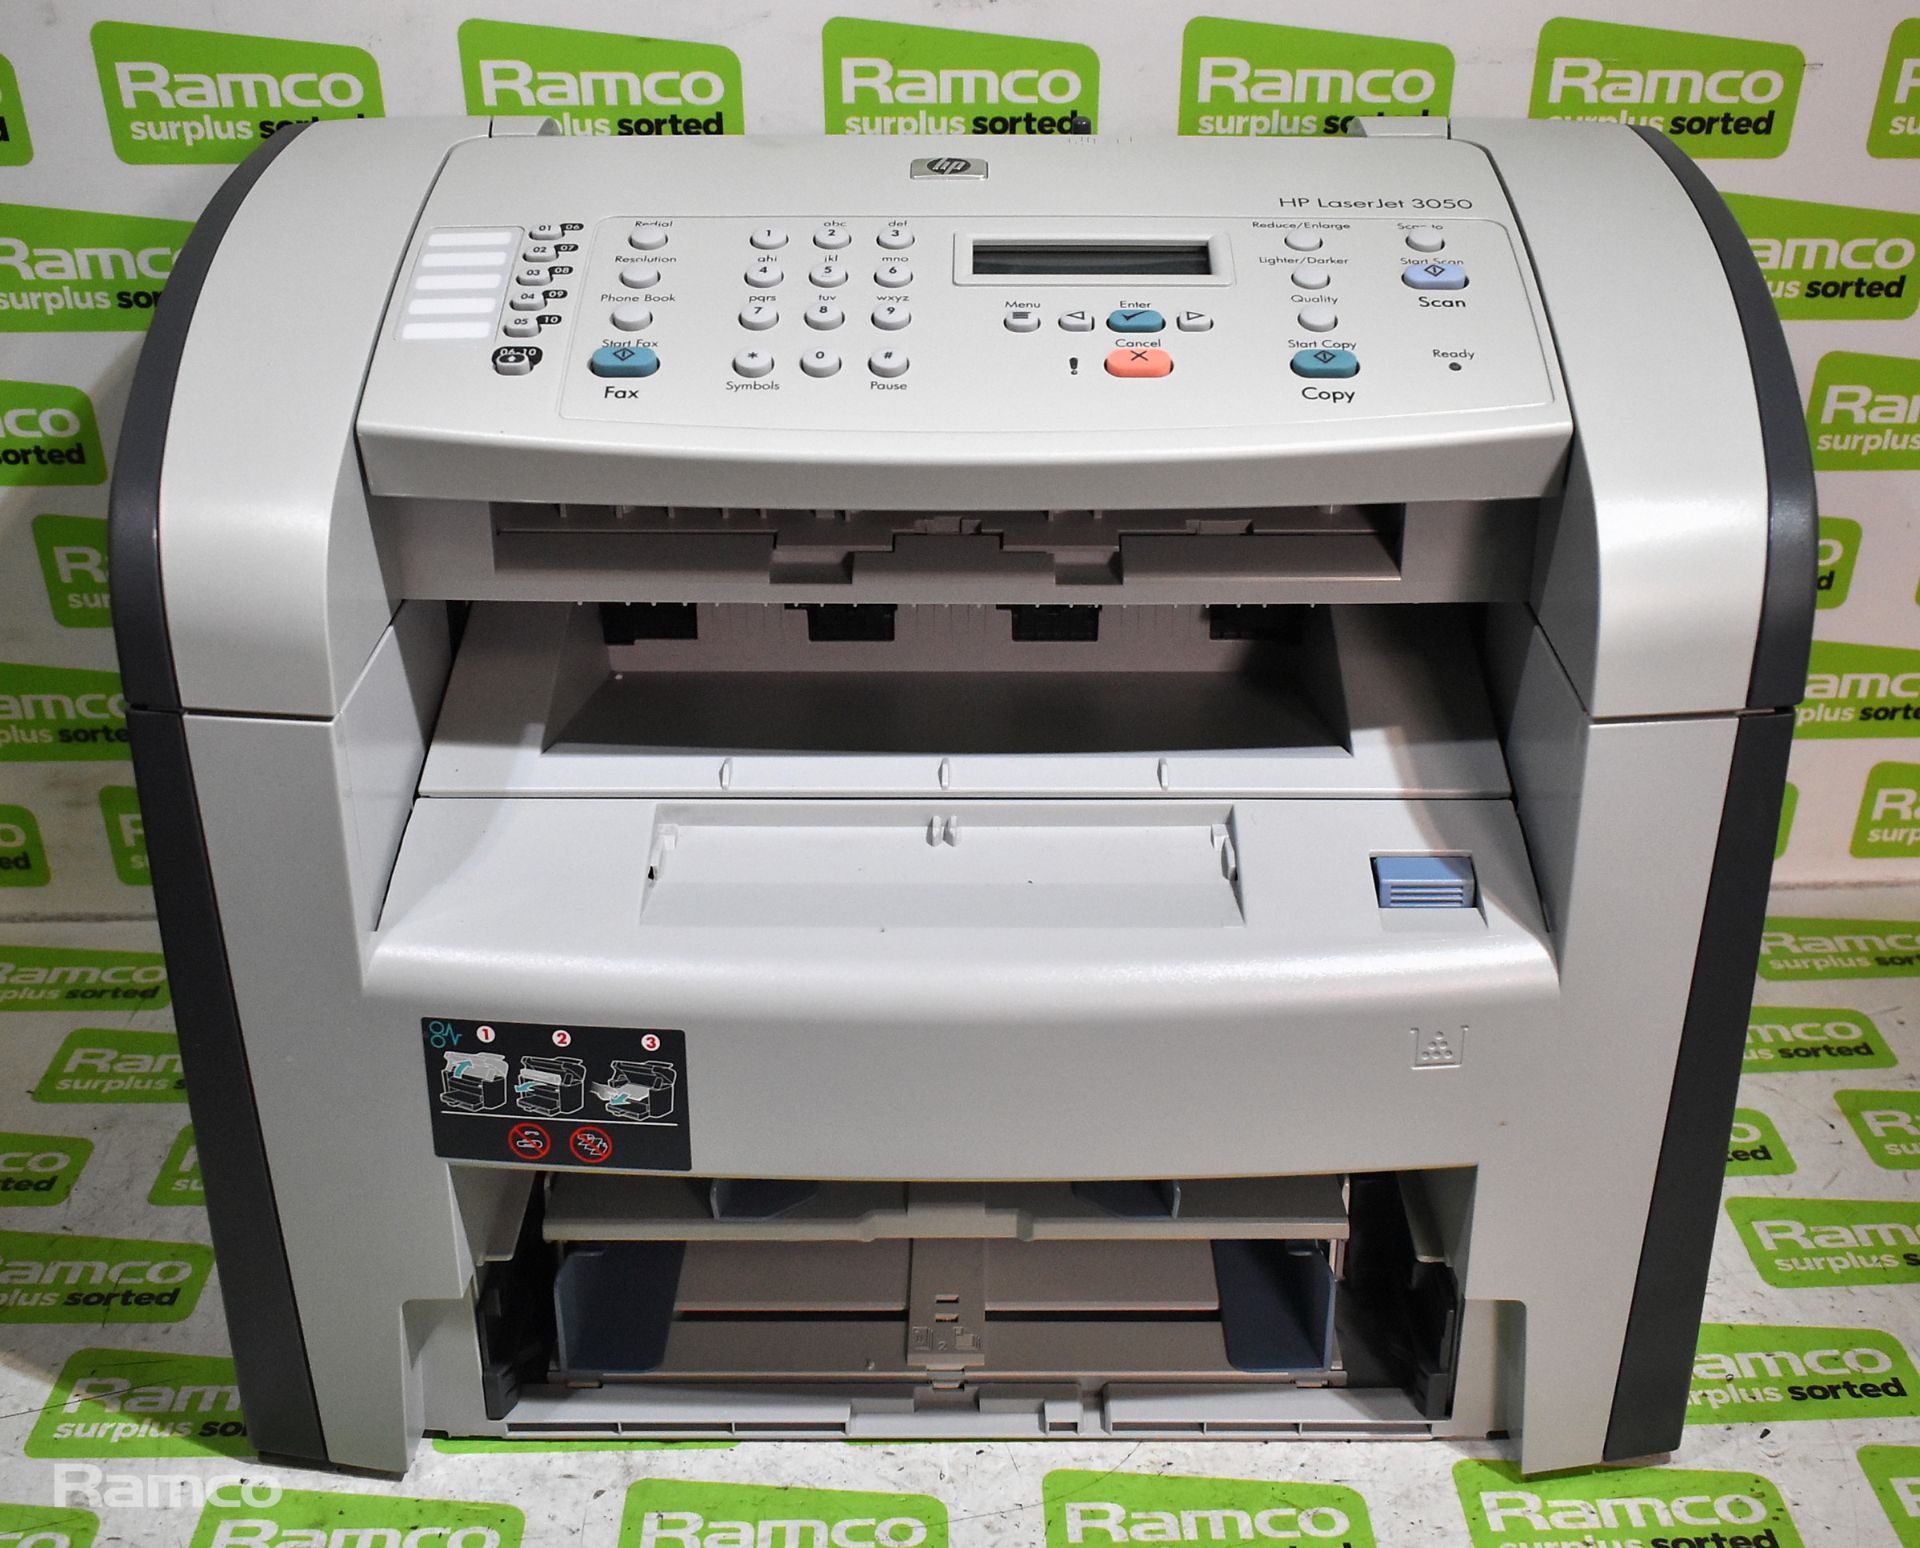 2x HP Q6504A LaserJet 3050 All-in-One printers, HP LaserJet 3050 All-in-One printer - Image 8 of 10